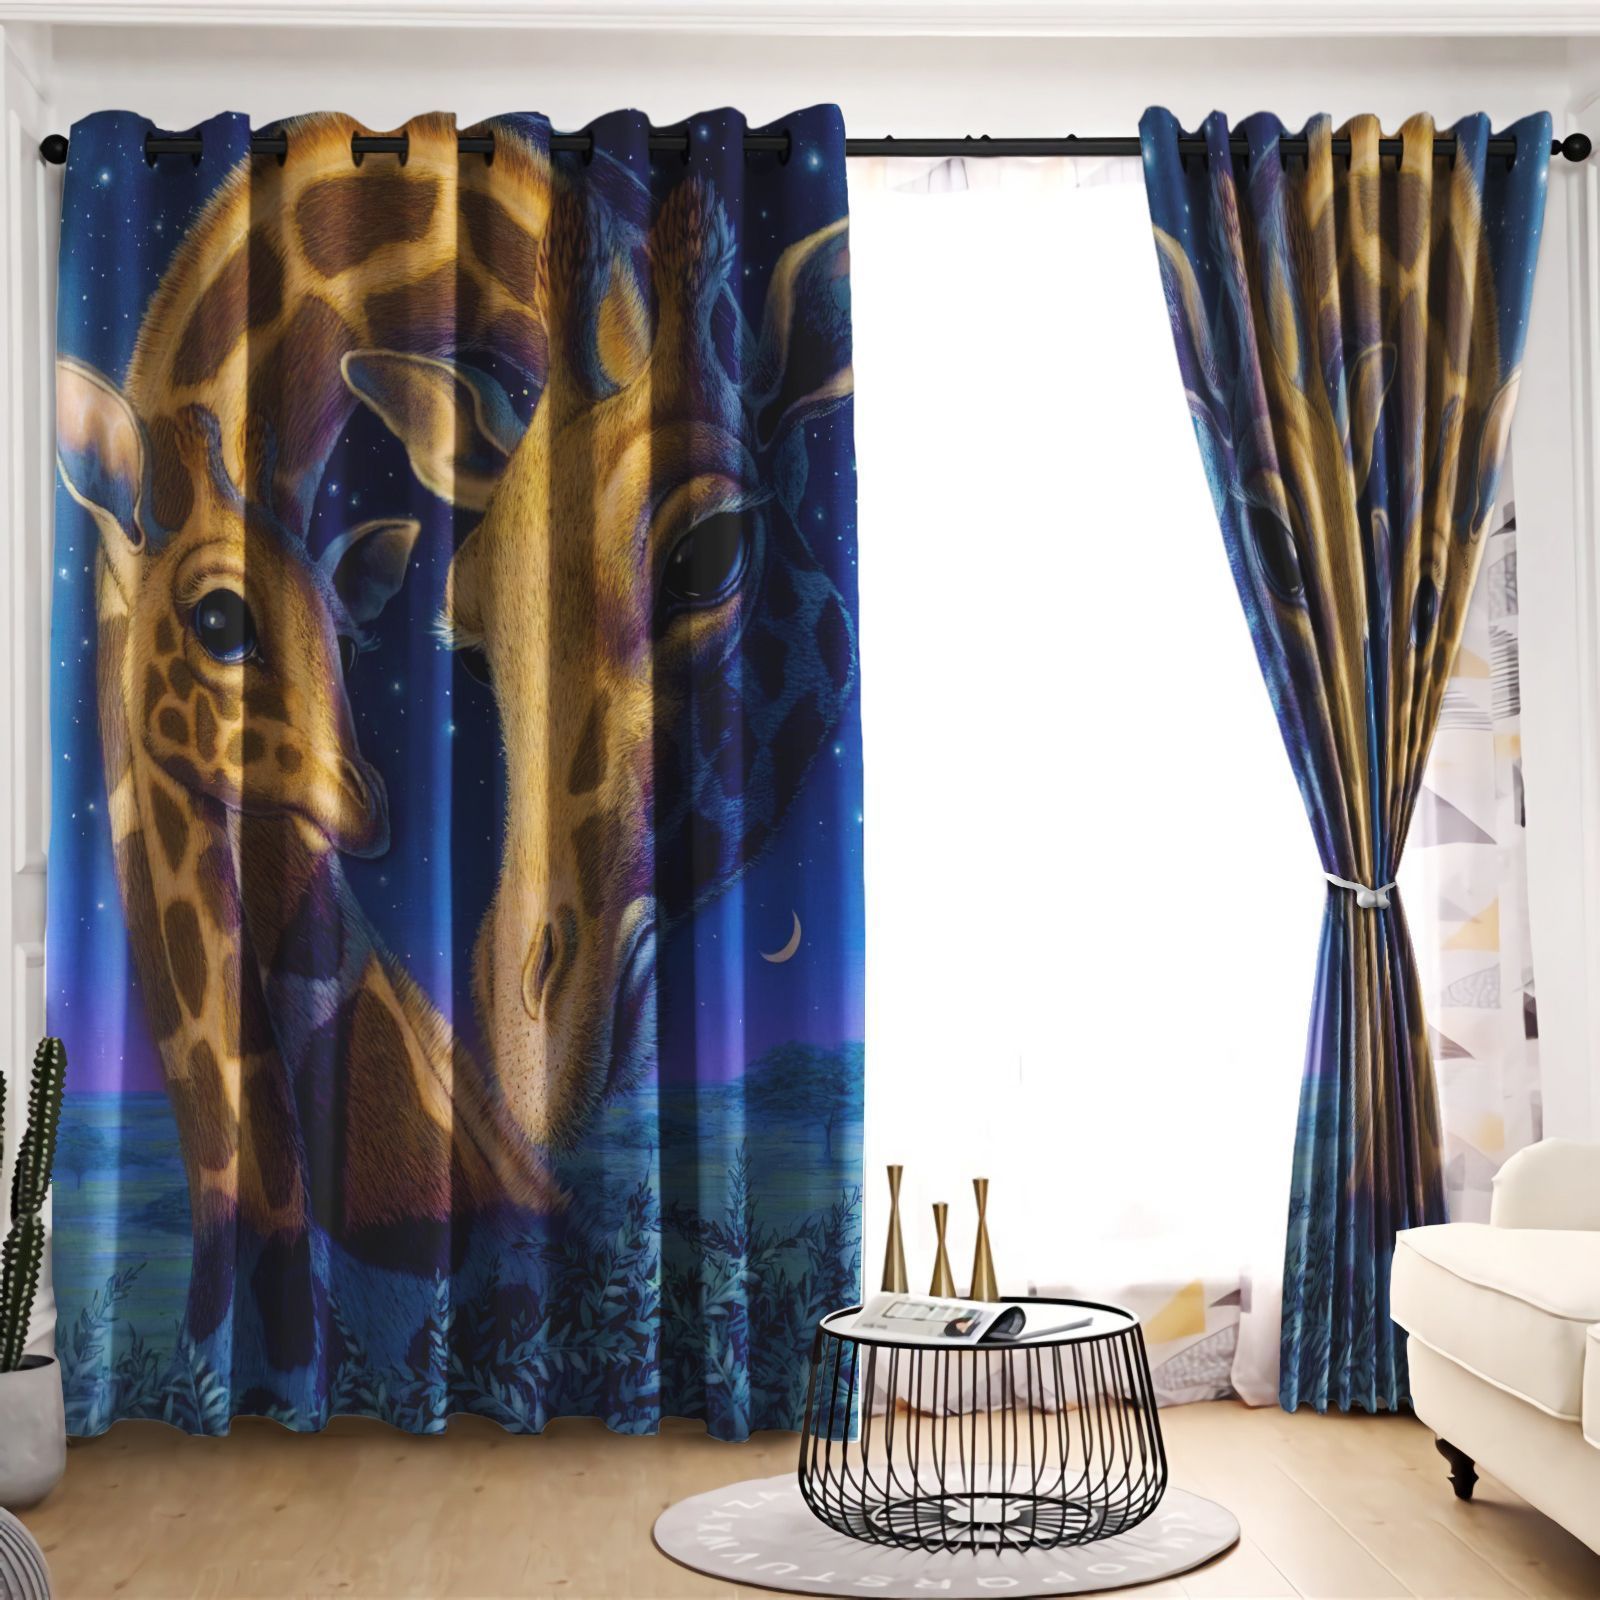 Giraffe Night Sky Printed Window Curtain Home Decor